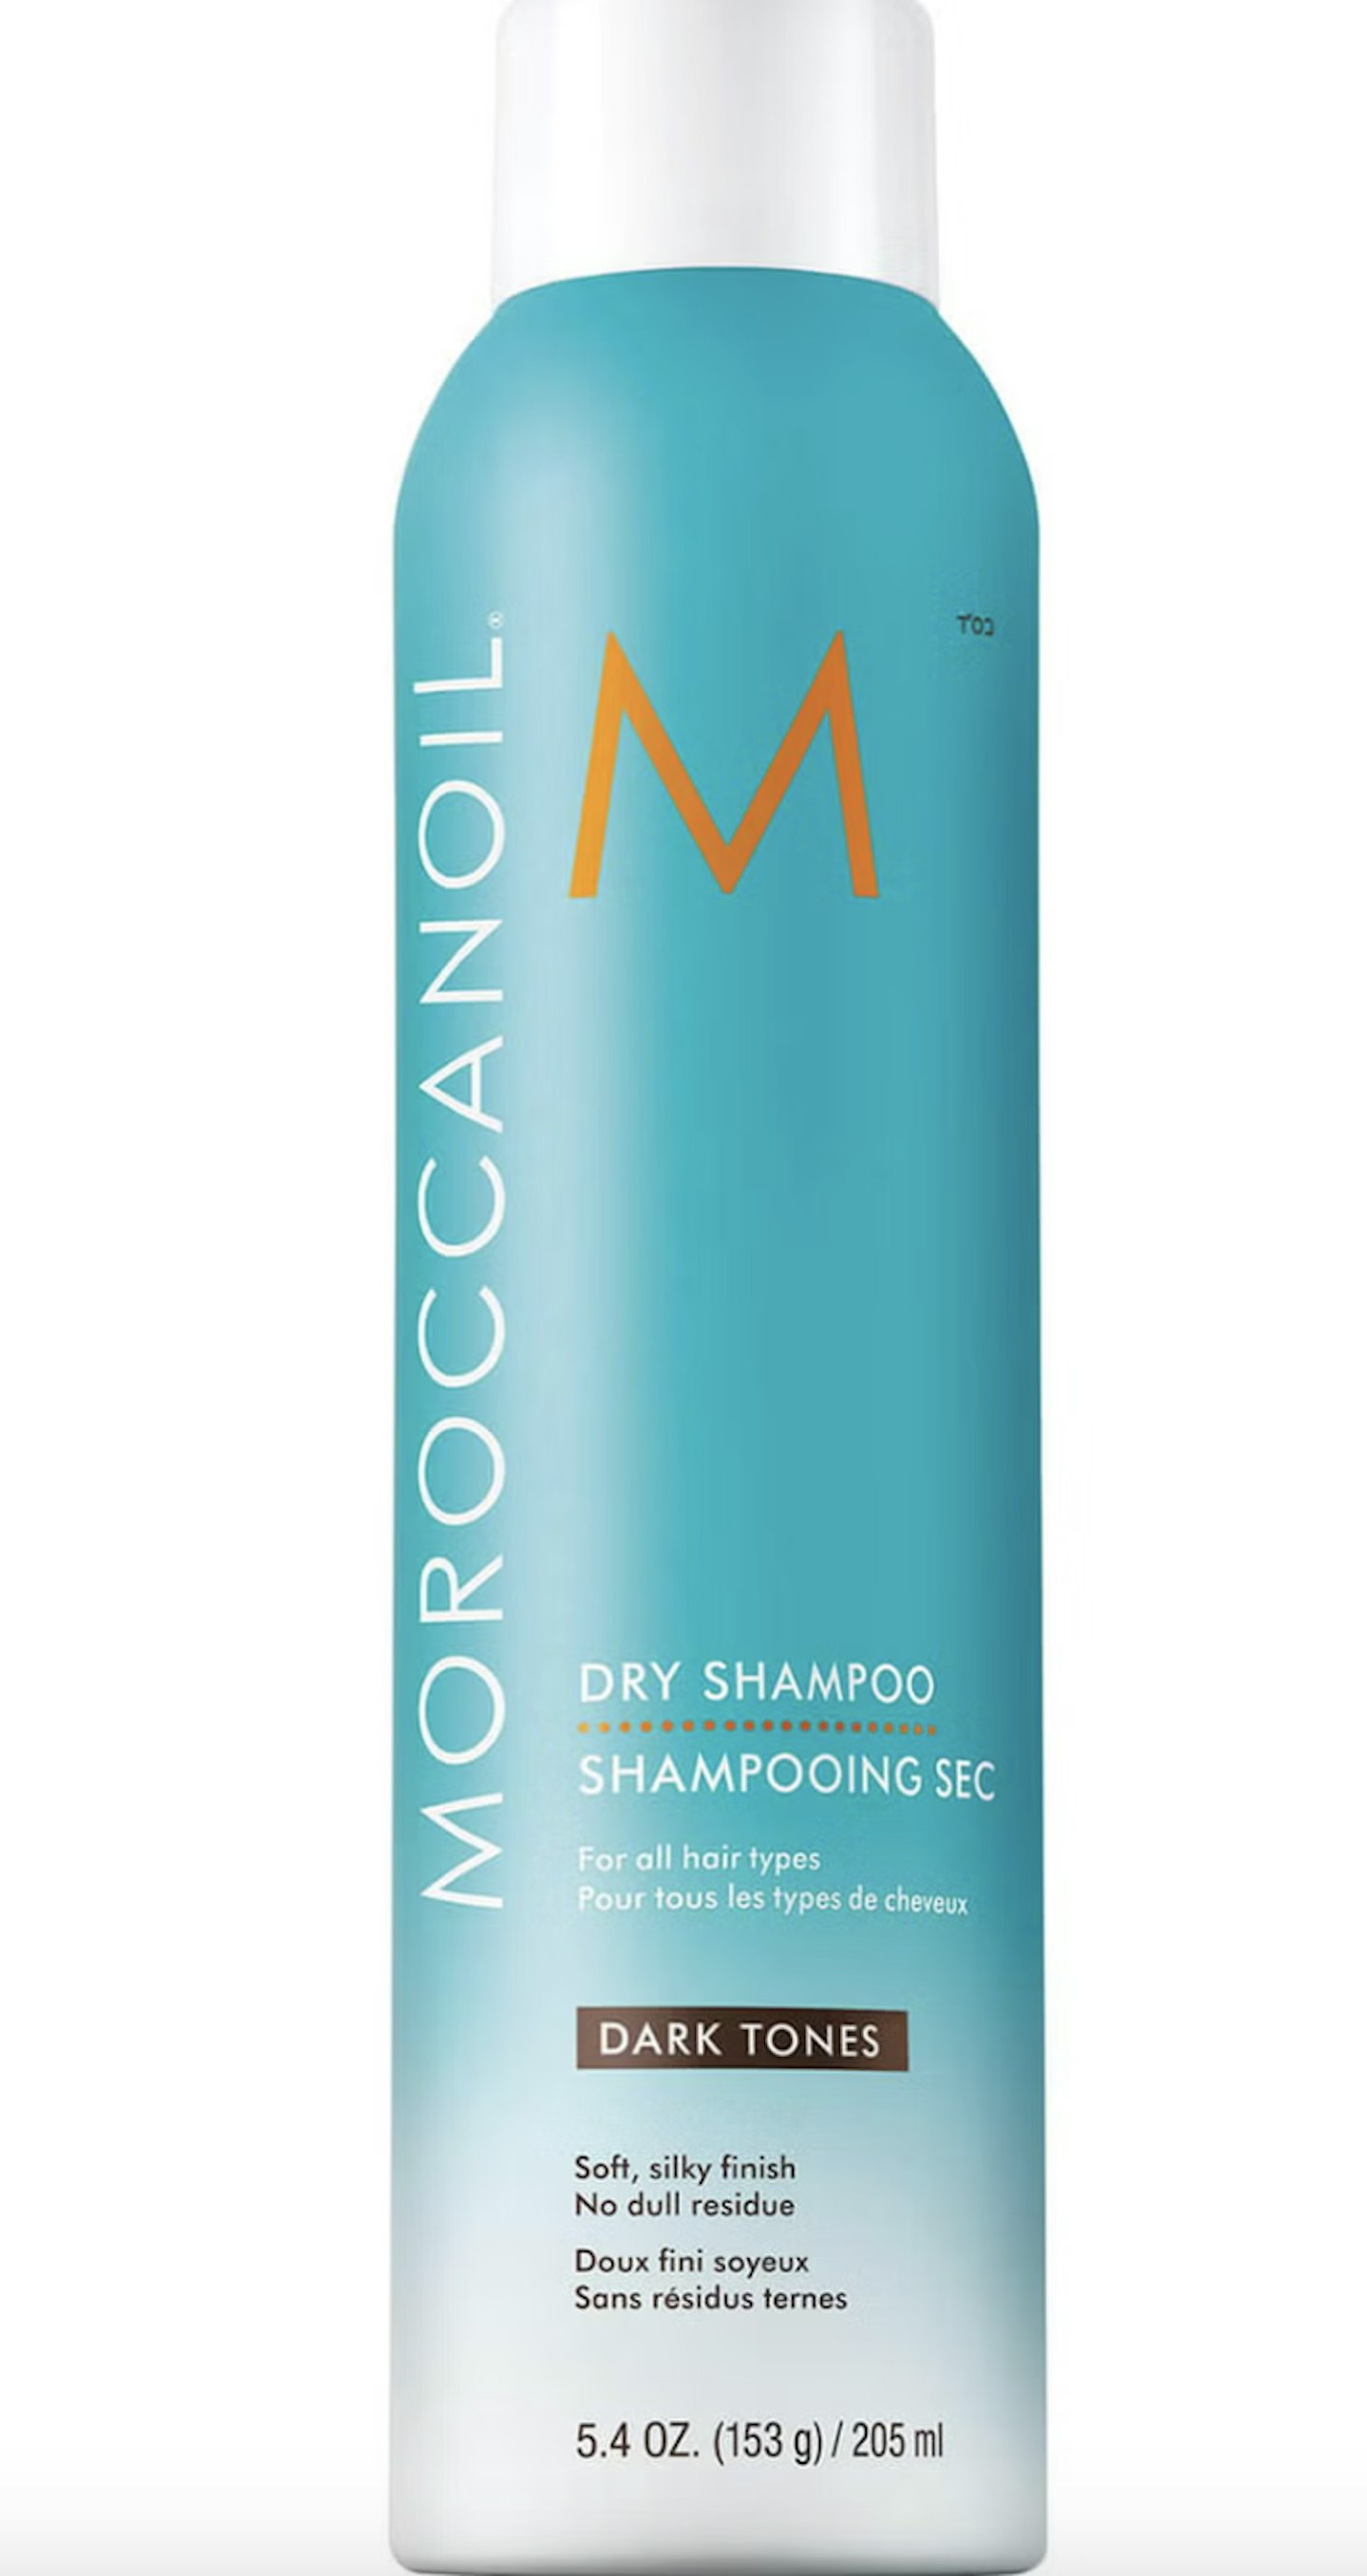 Moroccanoil Dry Shampoo Dark Tones